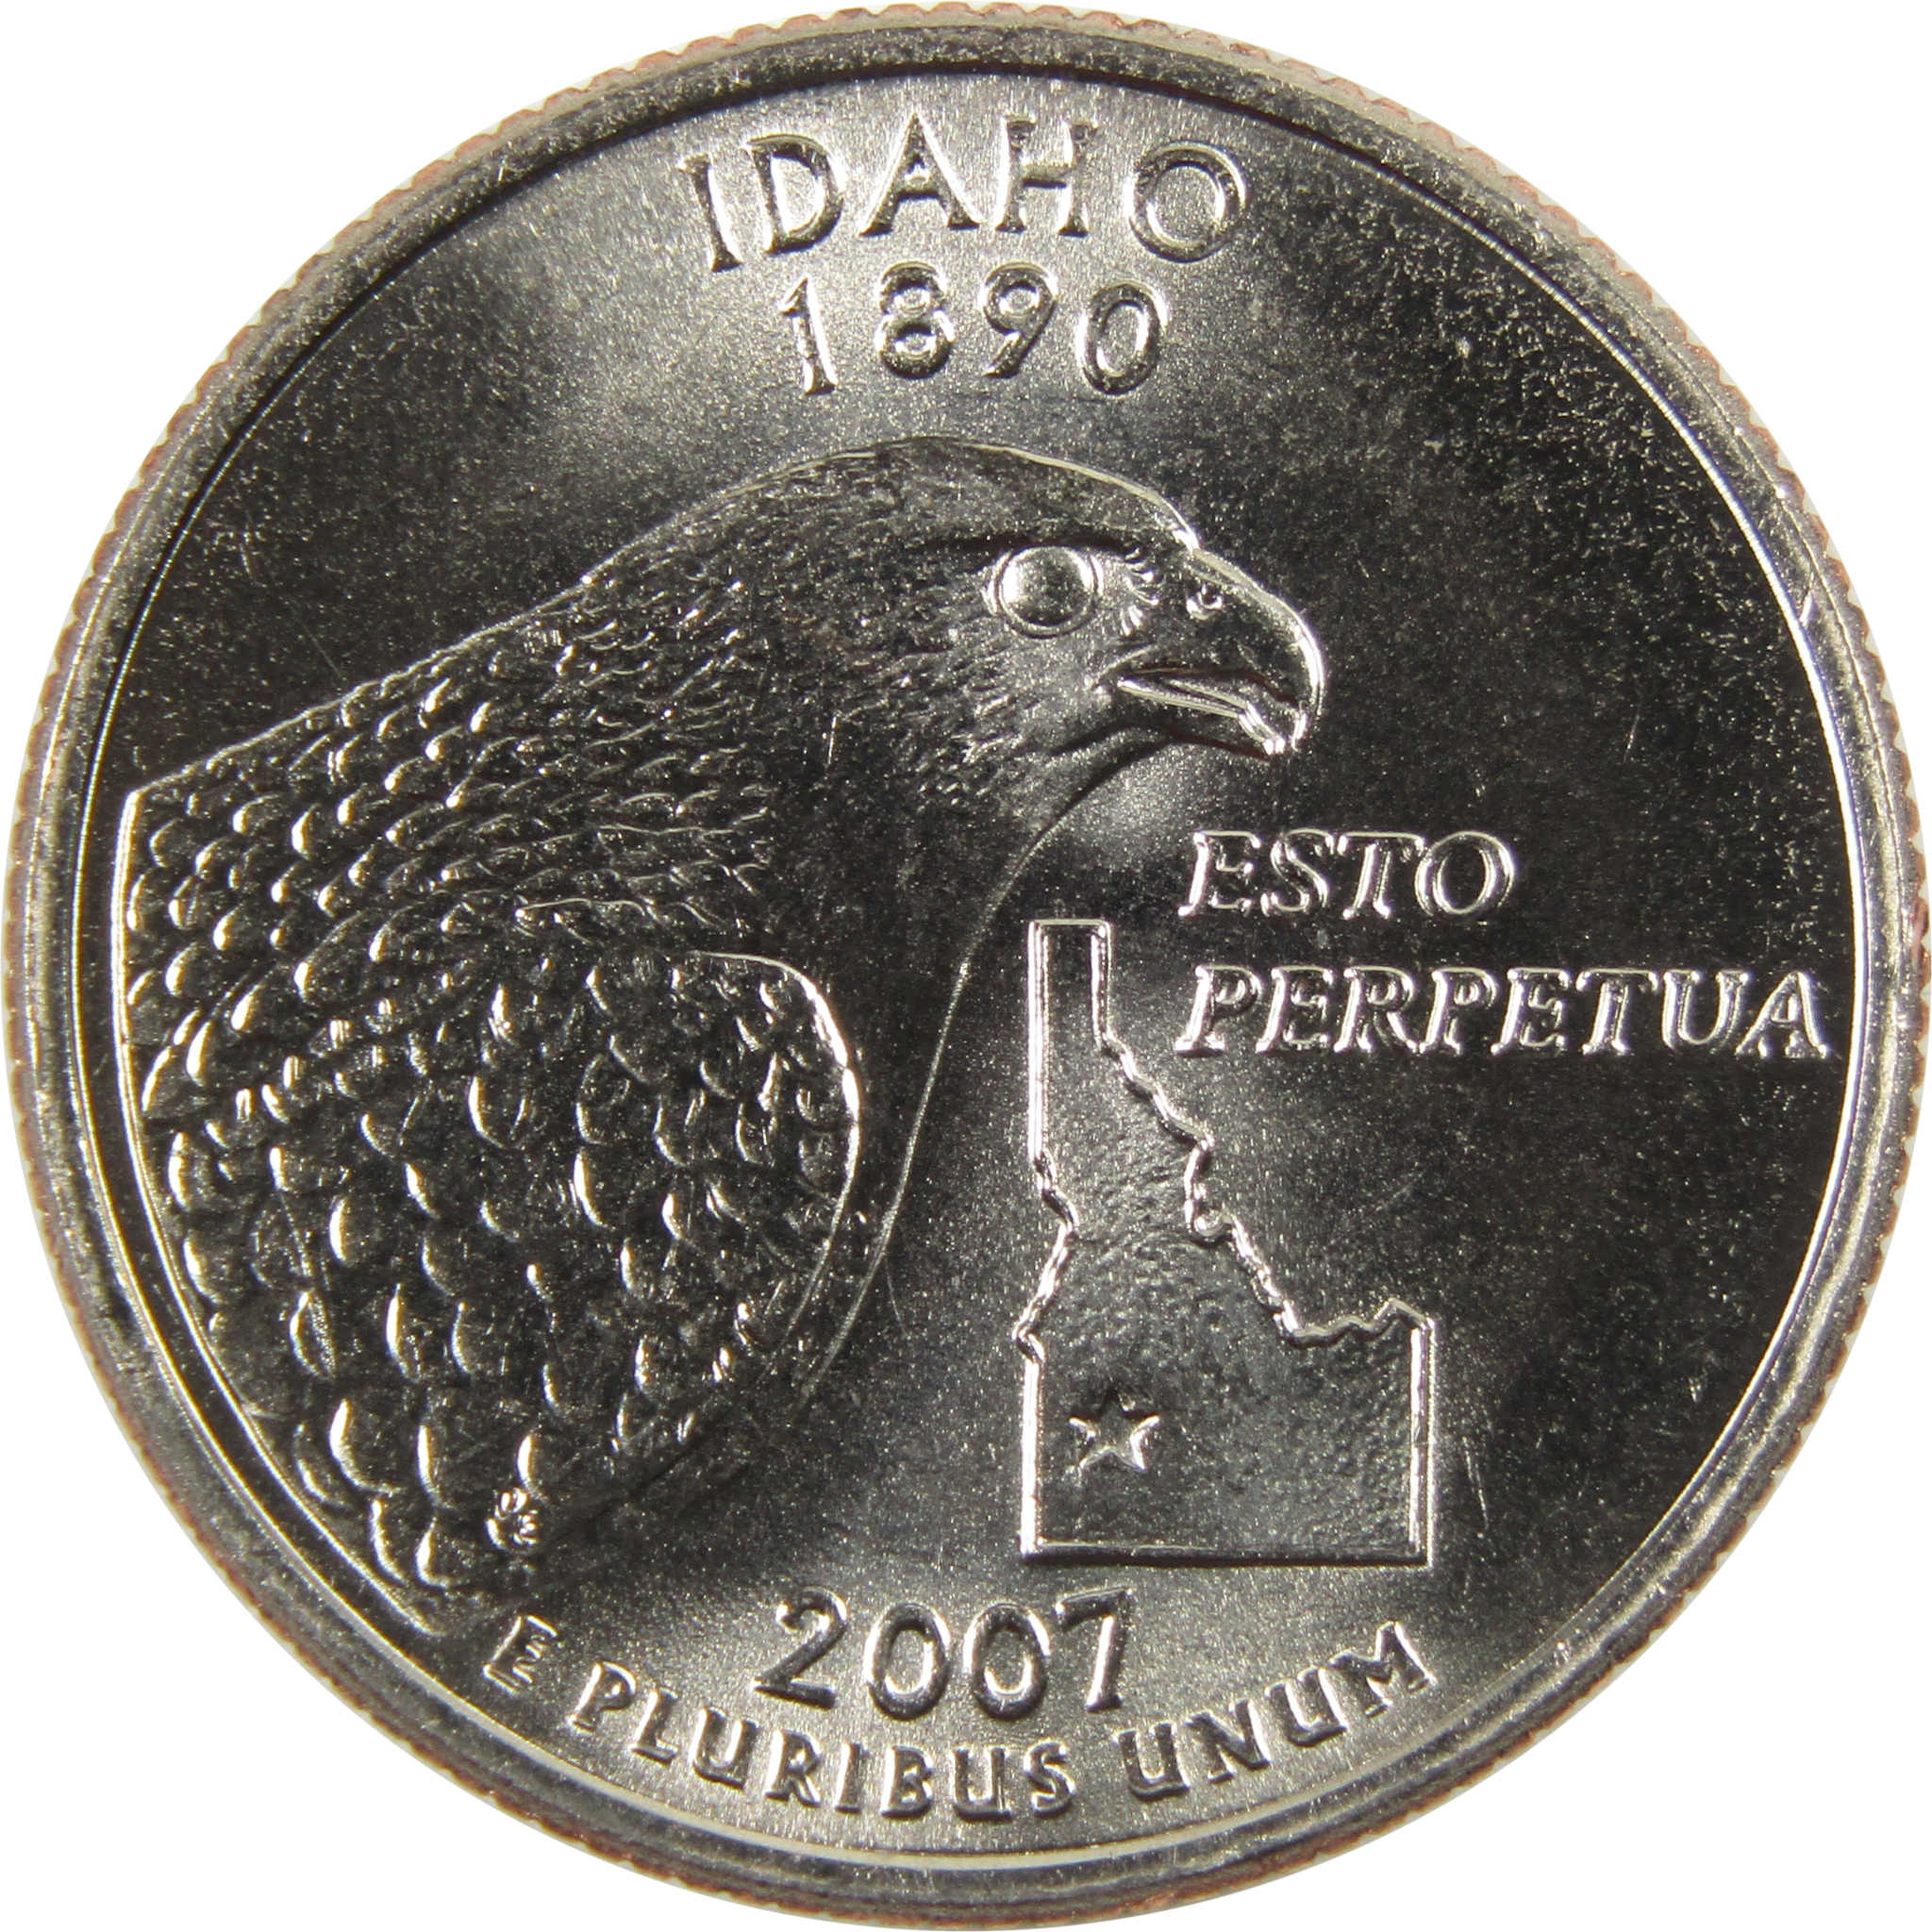 2007 D Idaho State Quarter BU Uncirculated Clad 25c Coin